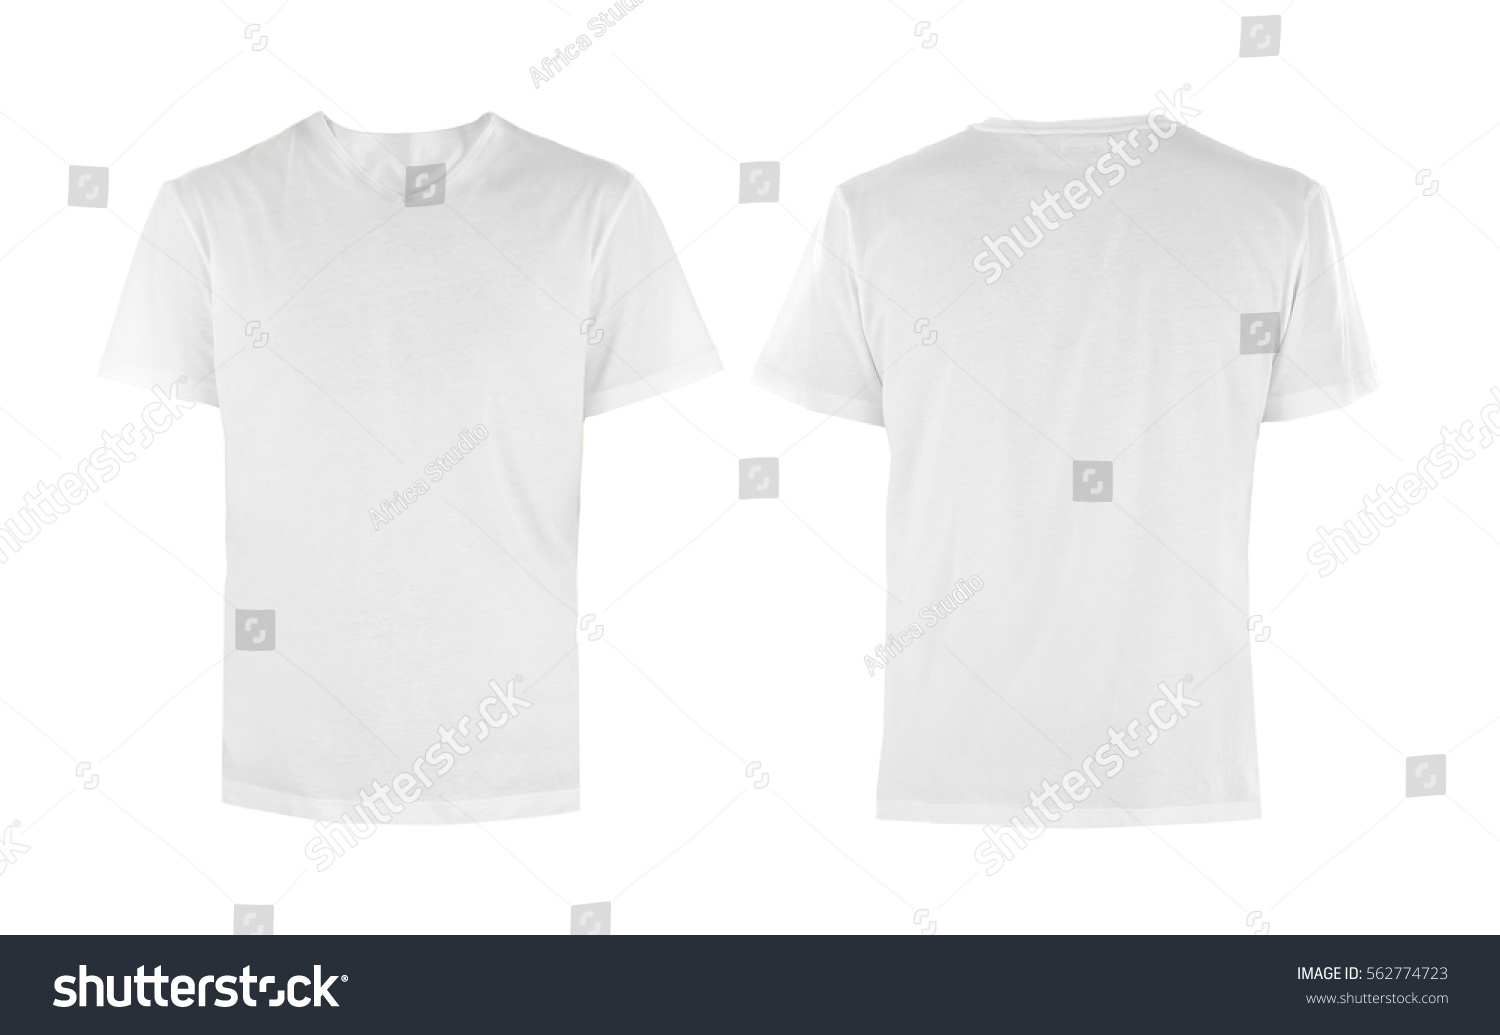 PowerPoint Template: t-shirt on white (mnjoolojk)